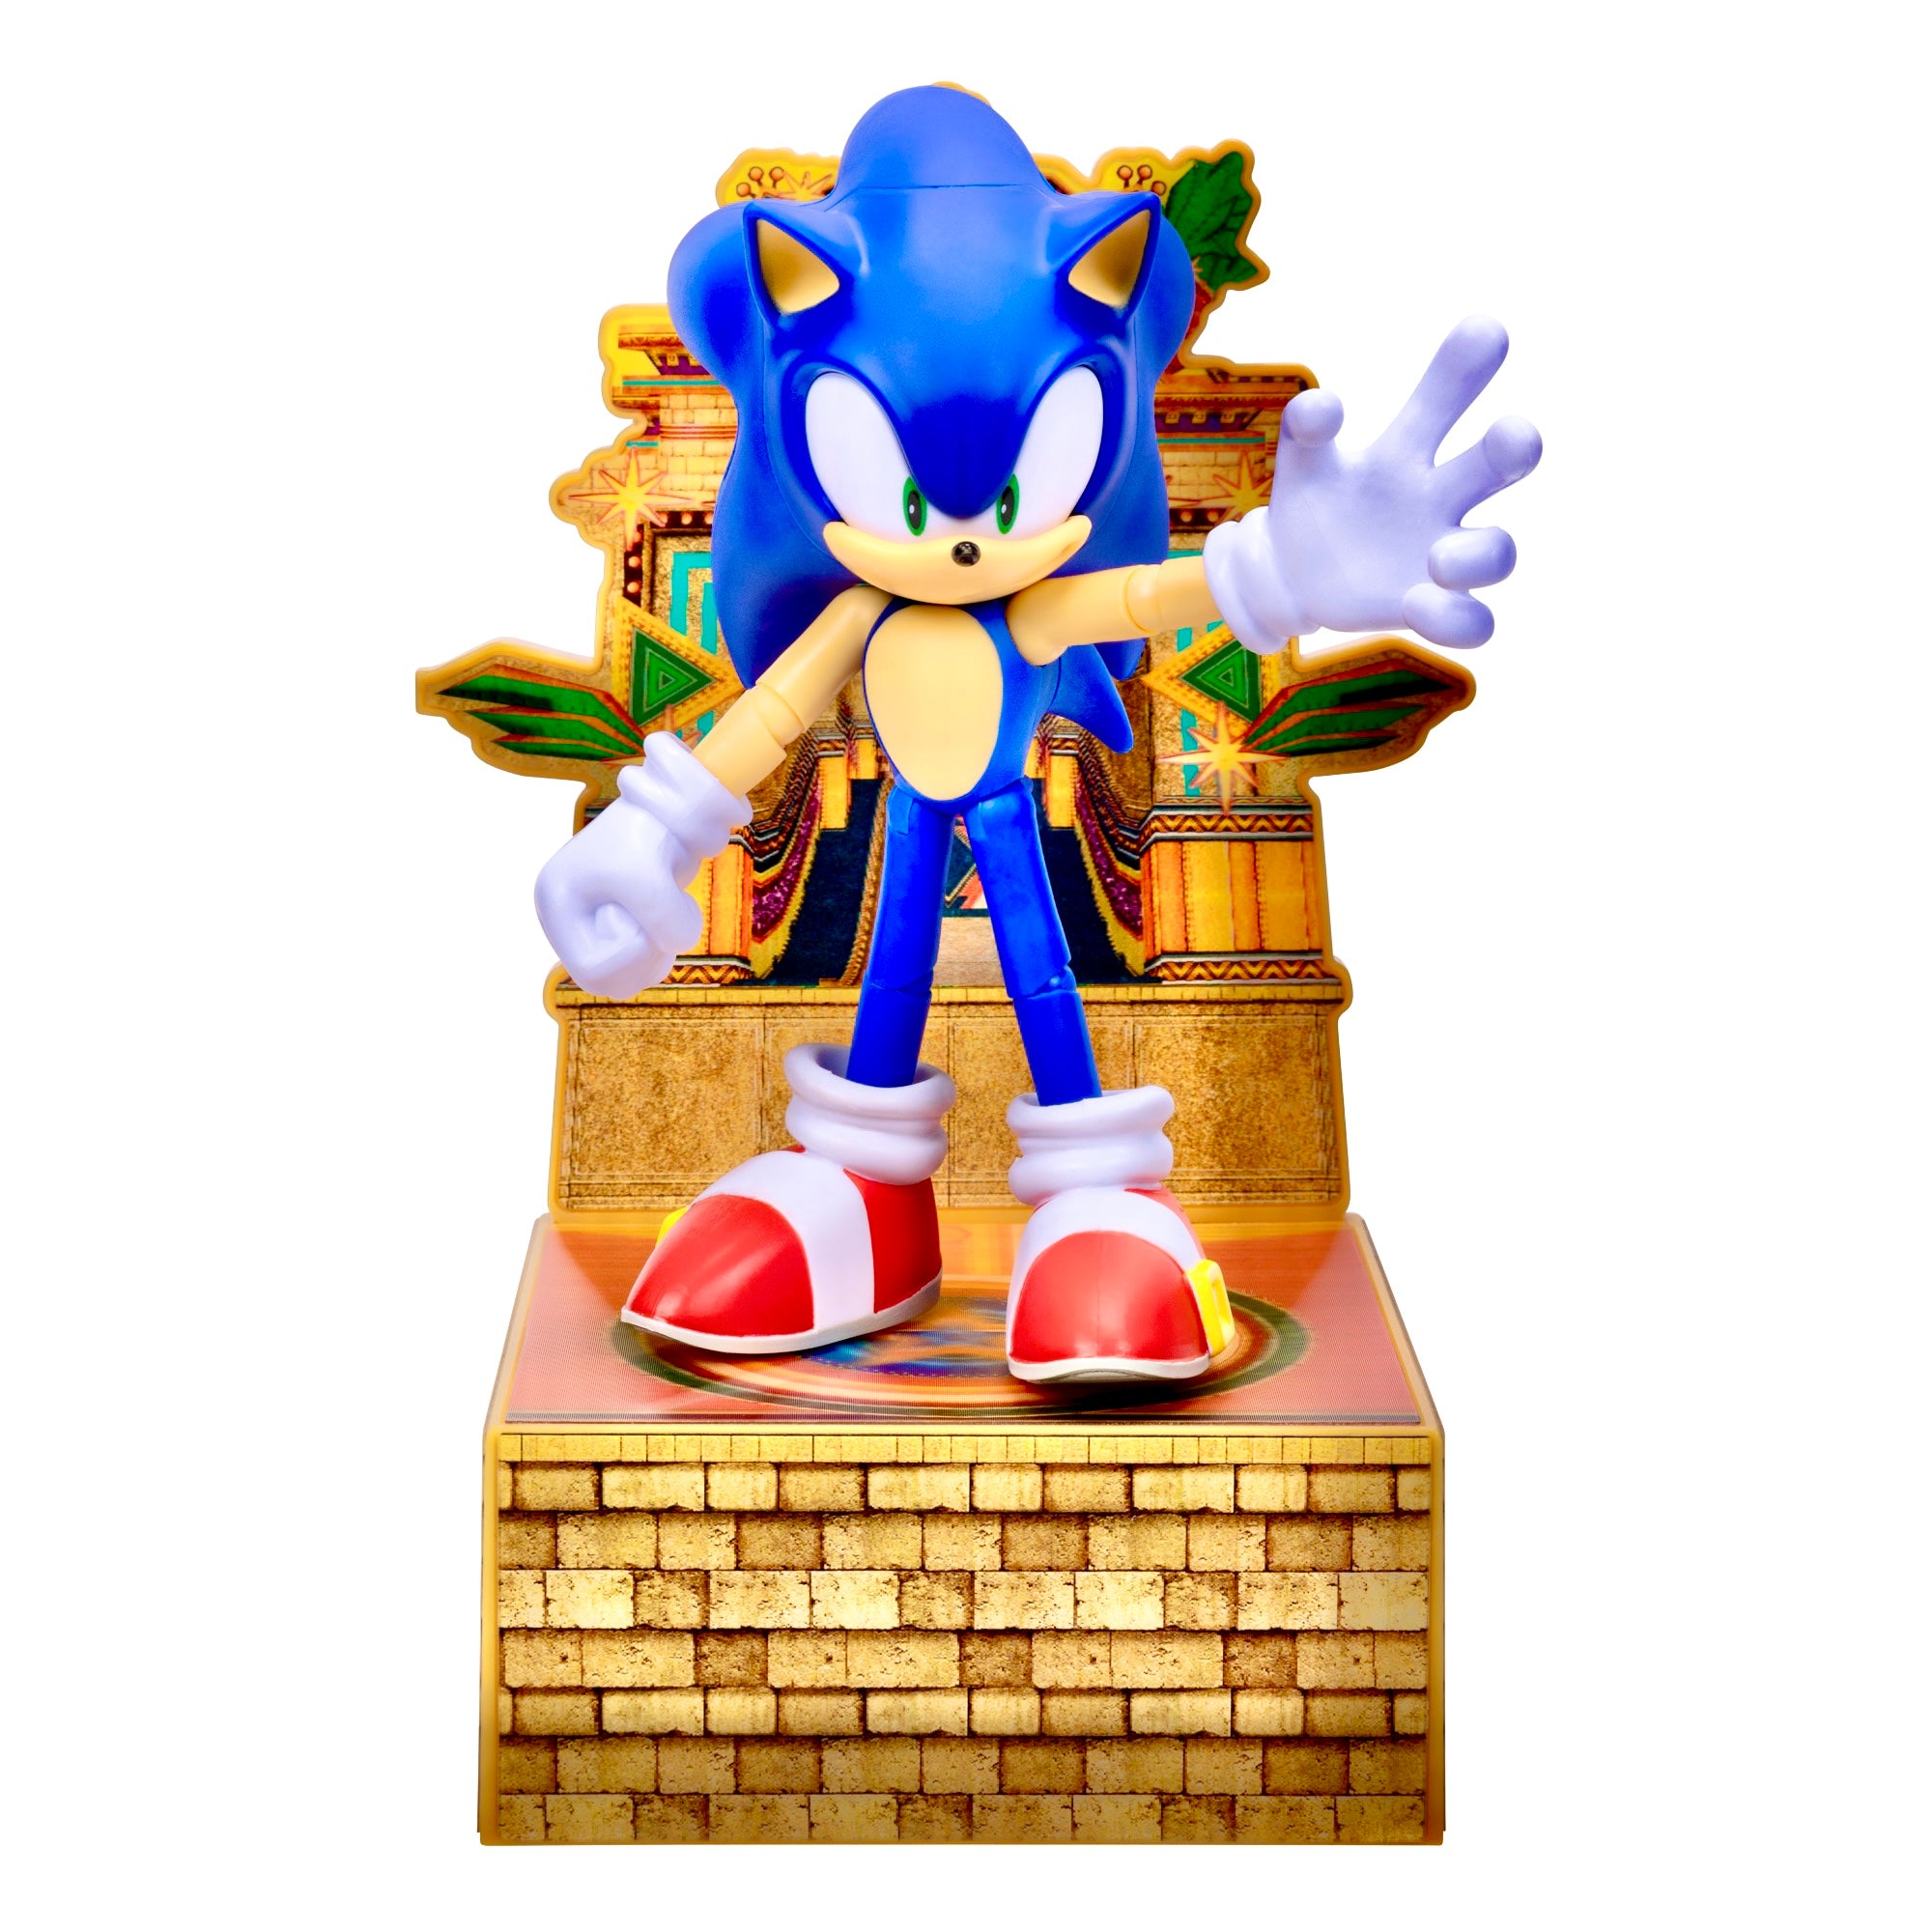 Sonic the Hedgehog Collector Edition Modern Action Figure | Jakks Pacific